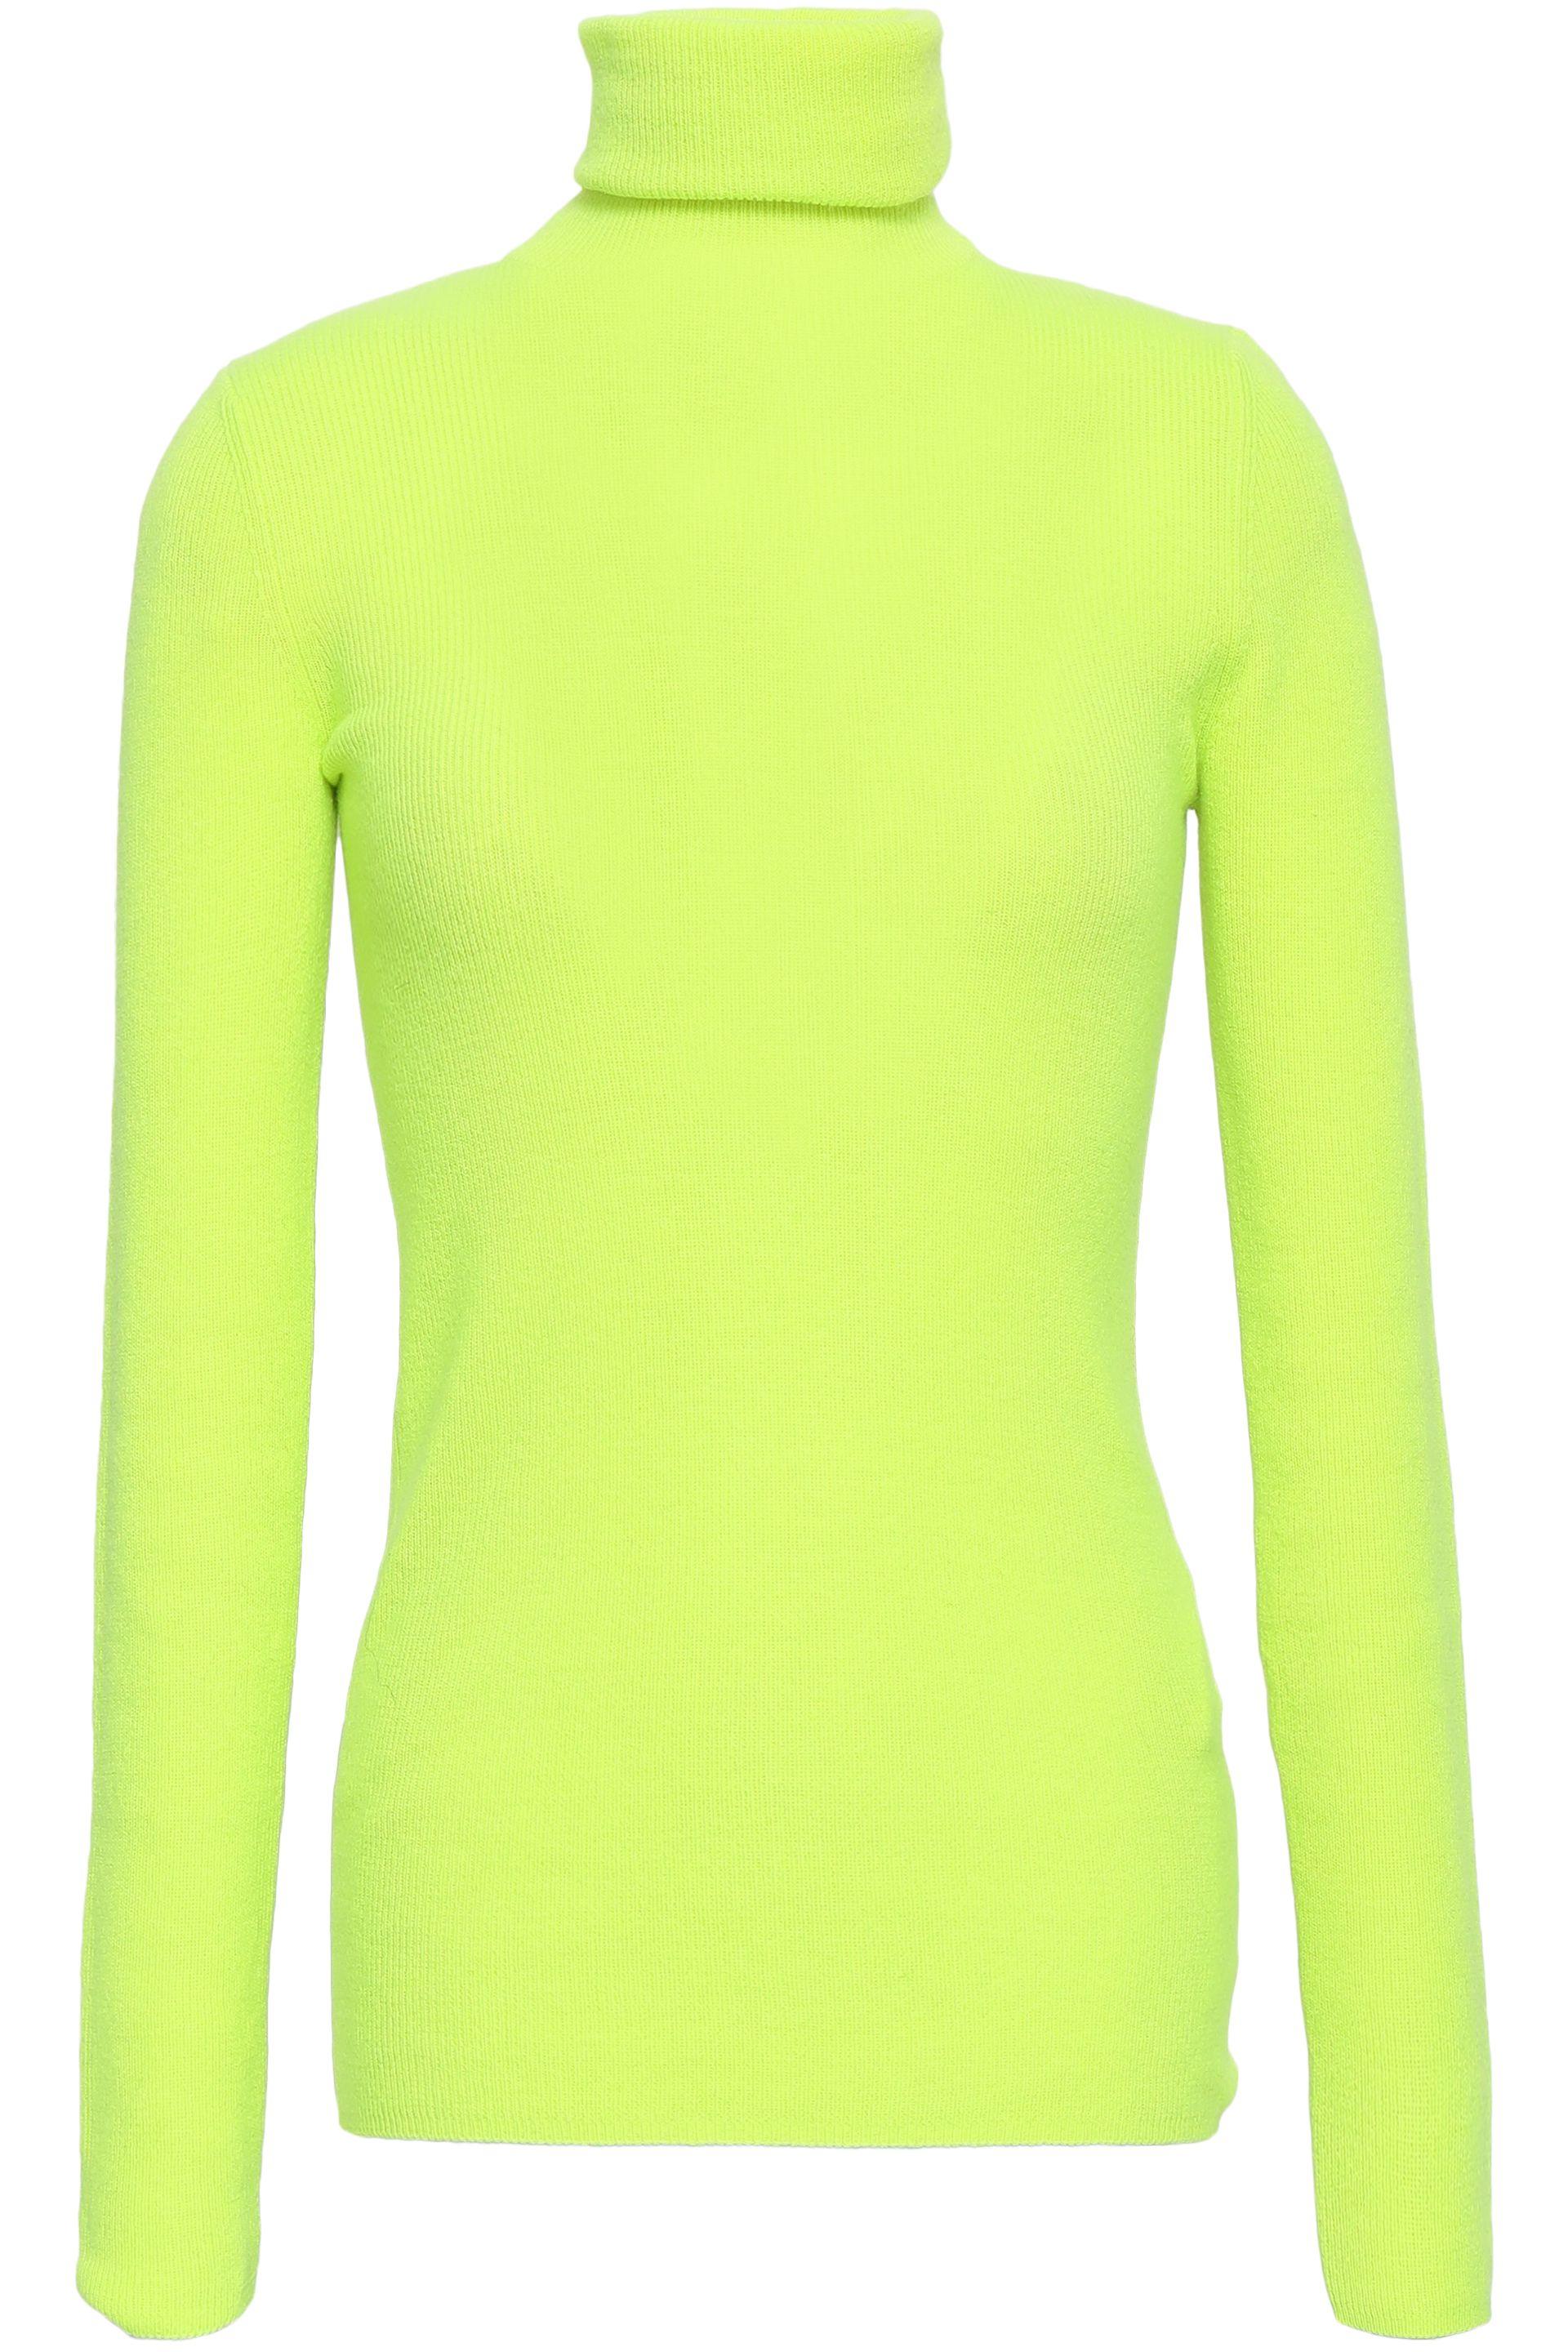 Christopher Kane Neon Cashmere Turtleneck Sweater Bright Yellow - Lyst